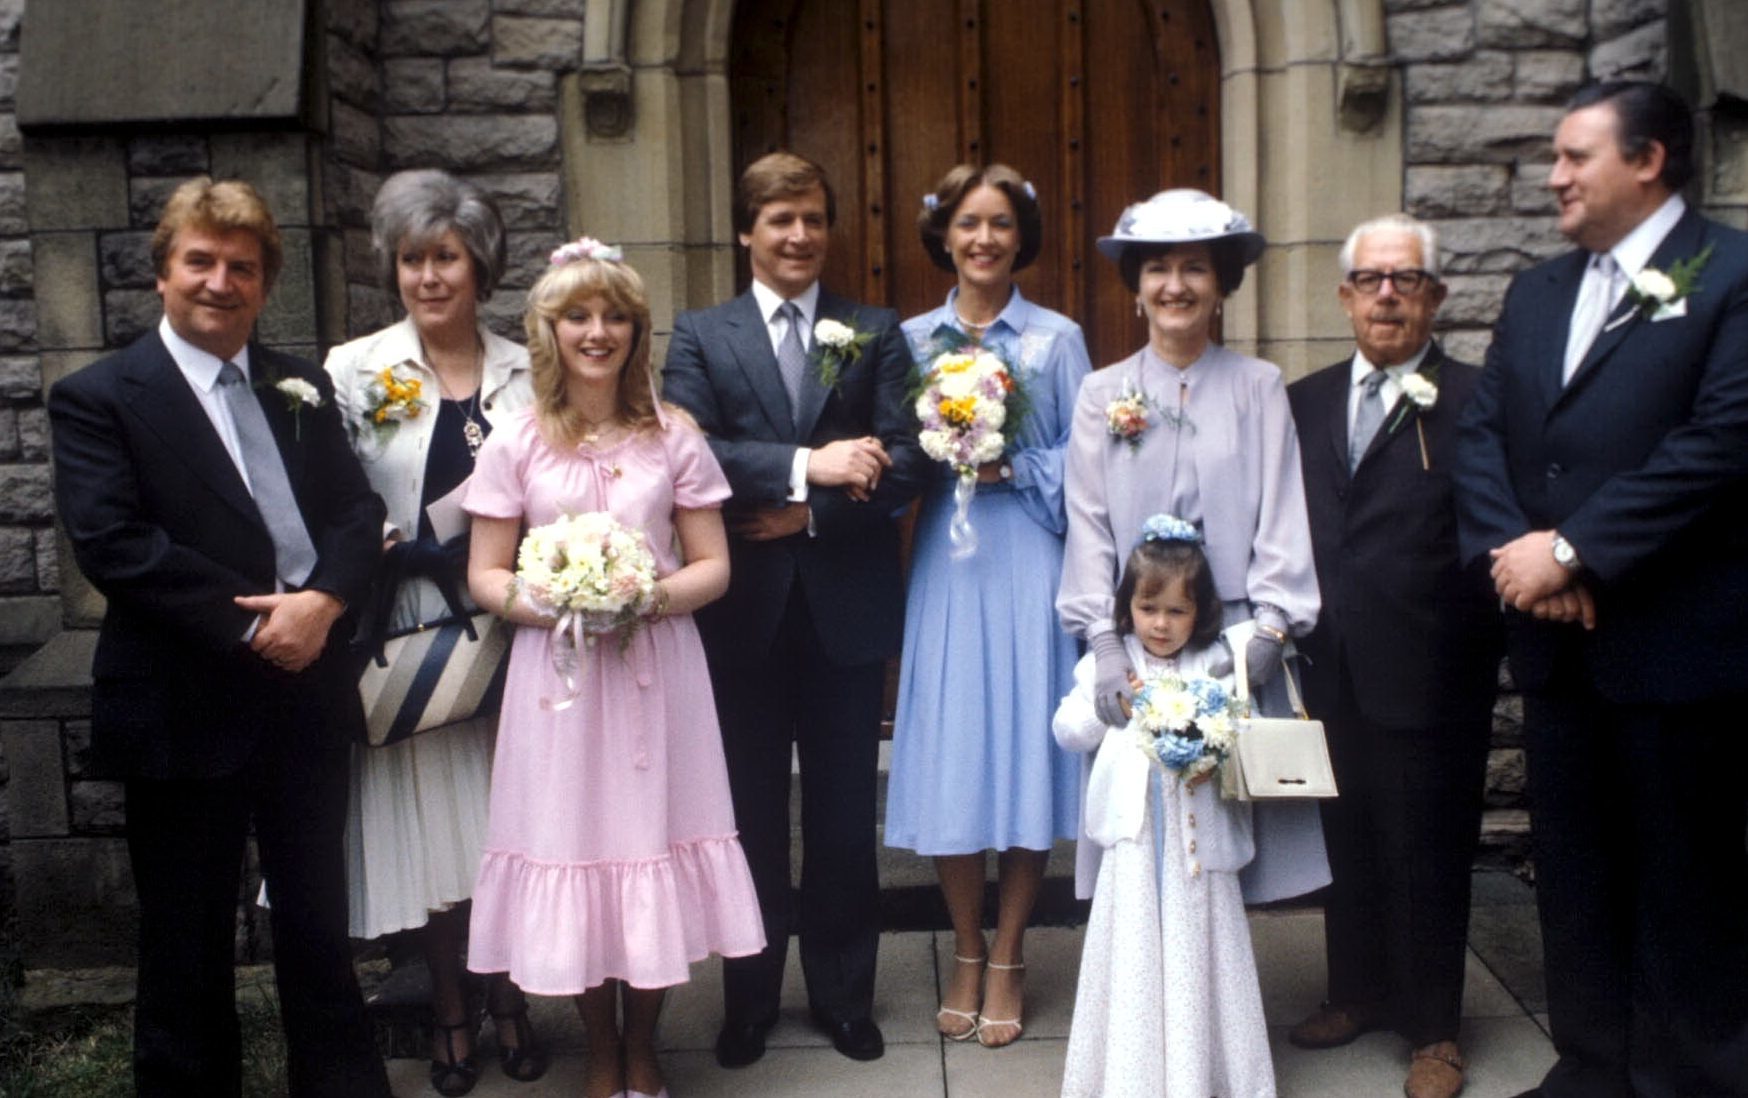 Ken and Deirdre's wedding day (ITV/REX/Shutterstock)